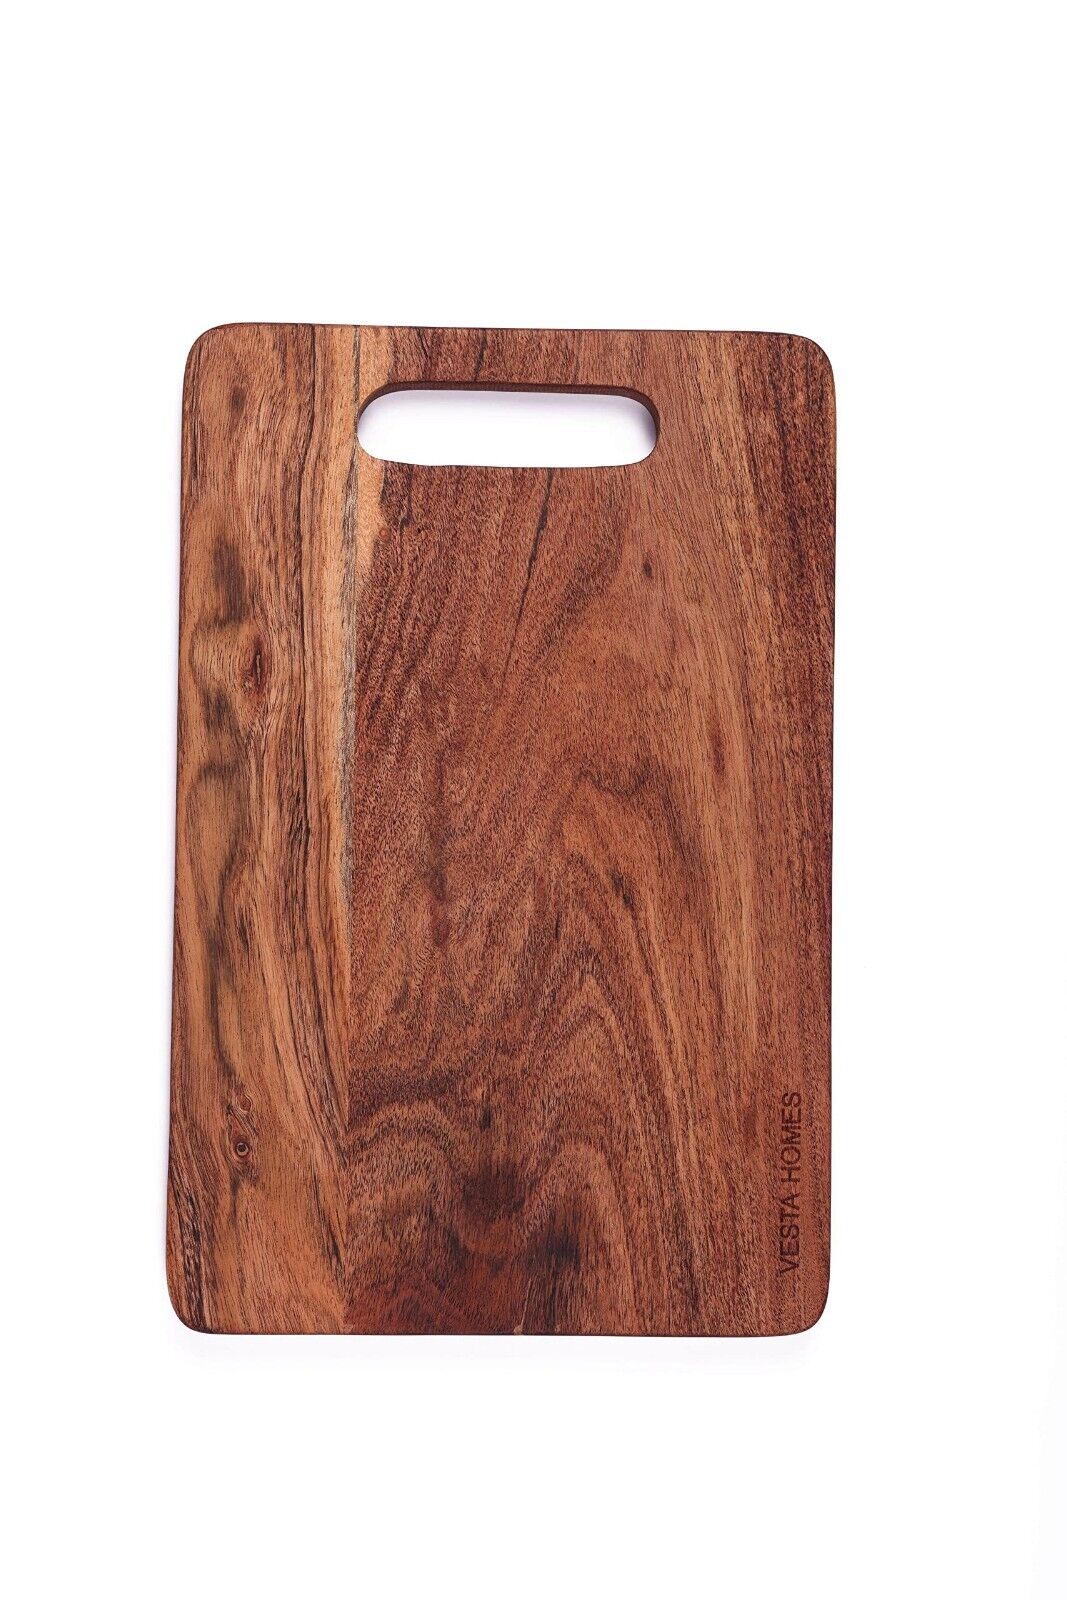 Kitchen Wooden Chopping/Cutting Board & Serving Tray Natural Acacia Wood